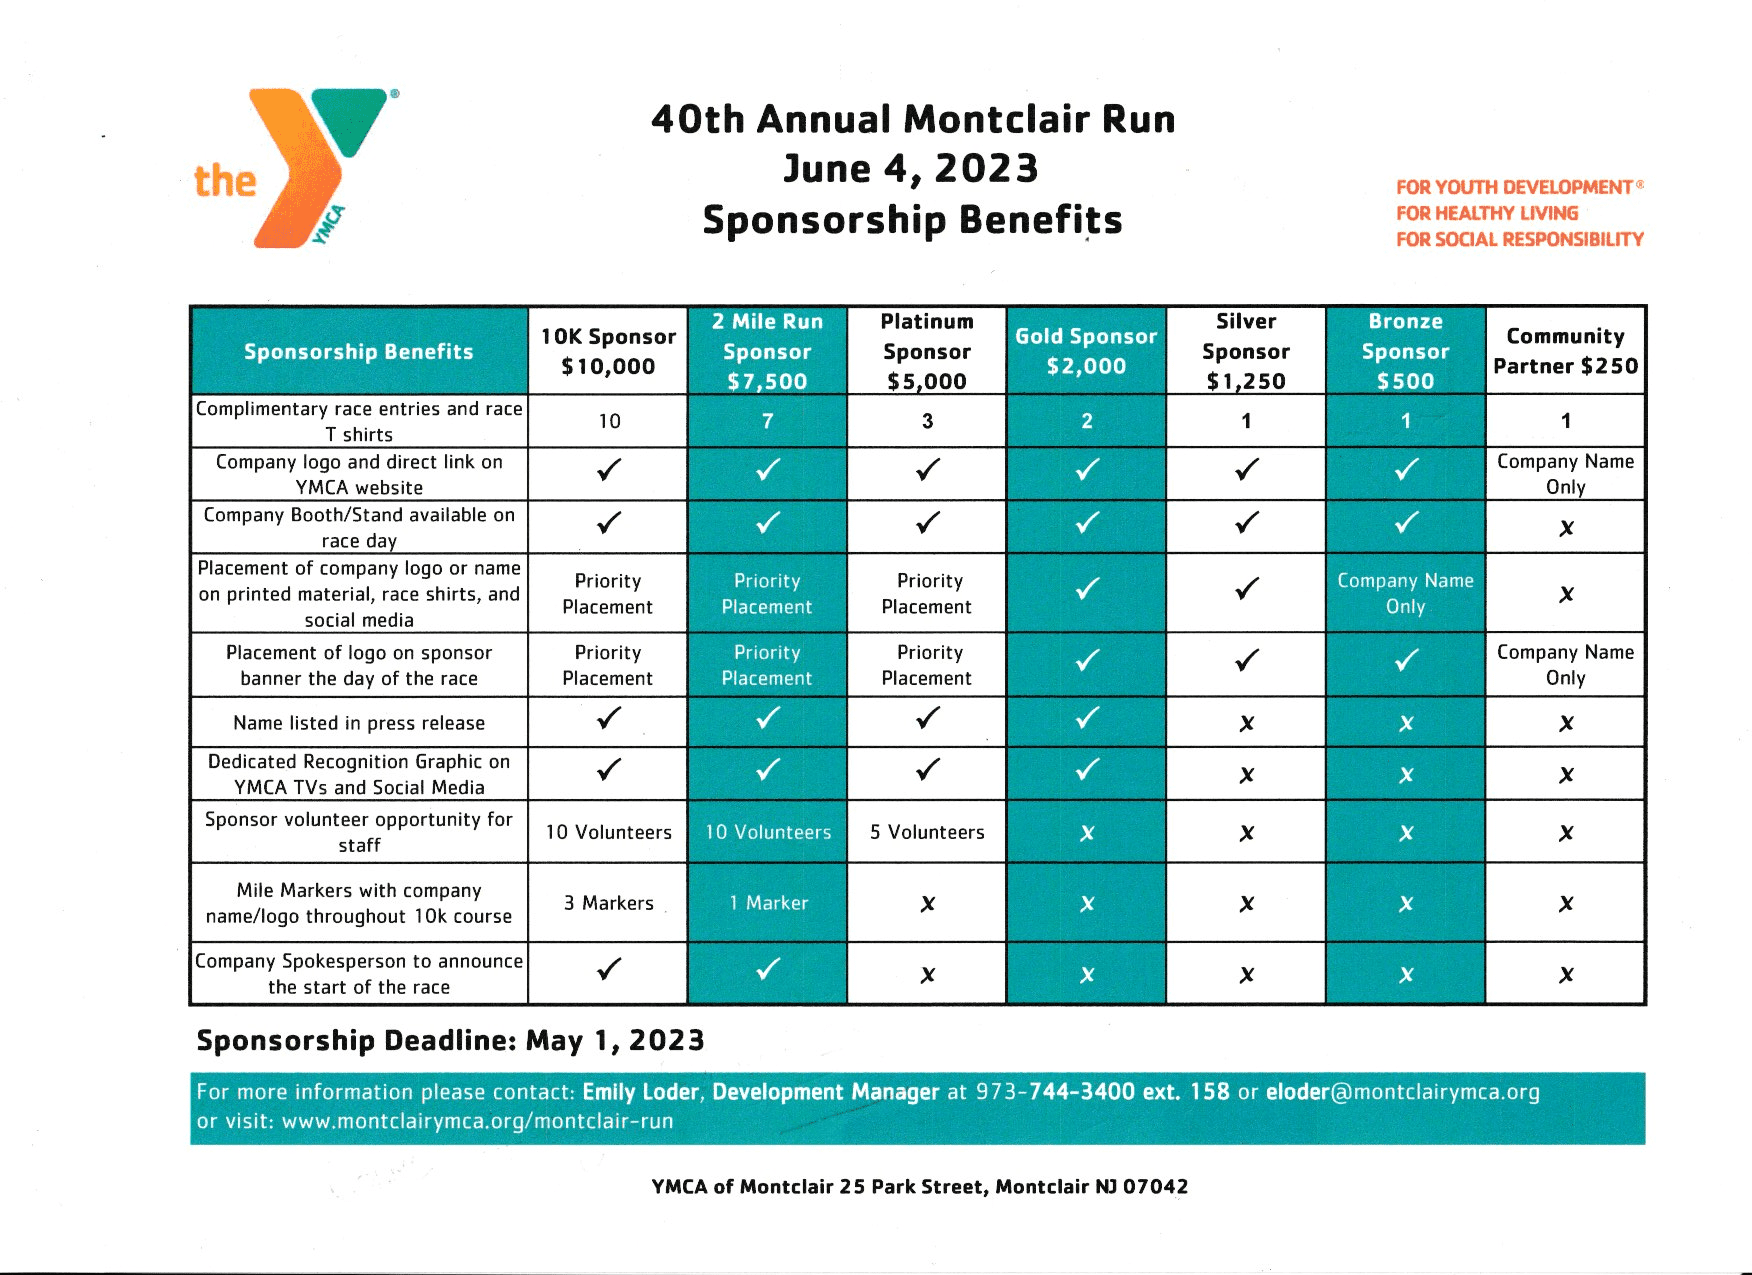 2023 sponsorship benefits for the montclair run